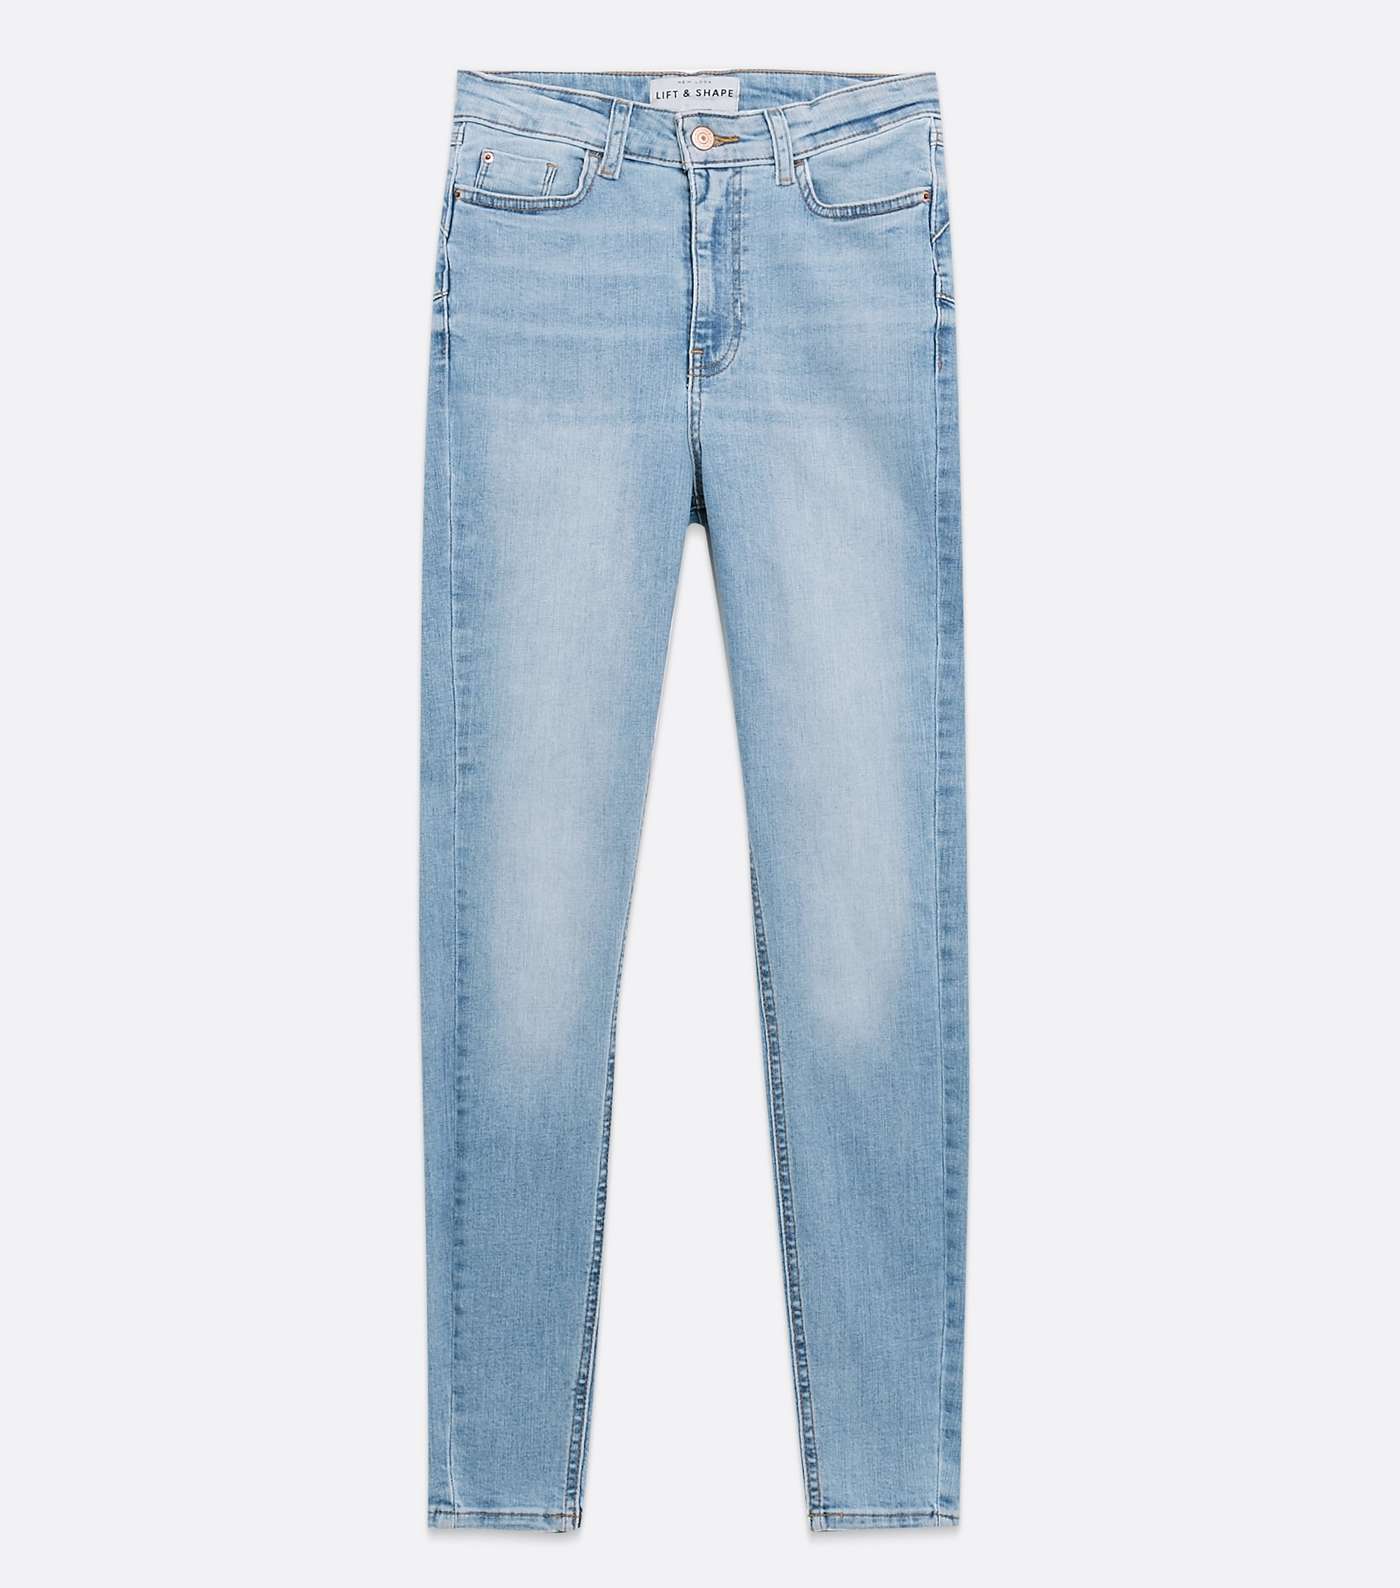 Pale Blue Light Wash Lift & Shape Jenna Skinny Jeans Image 5